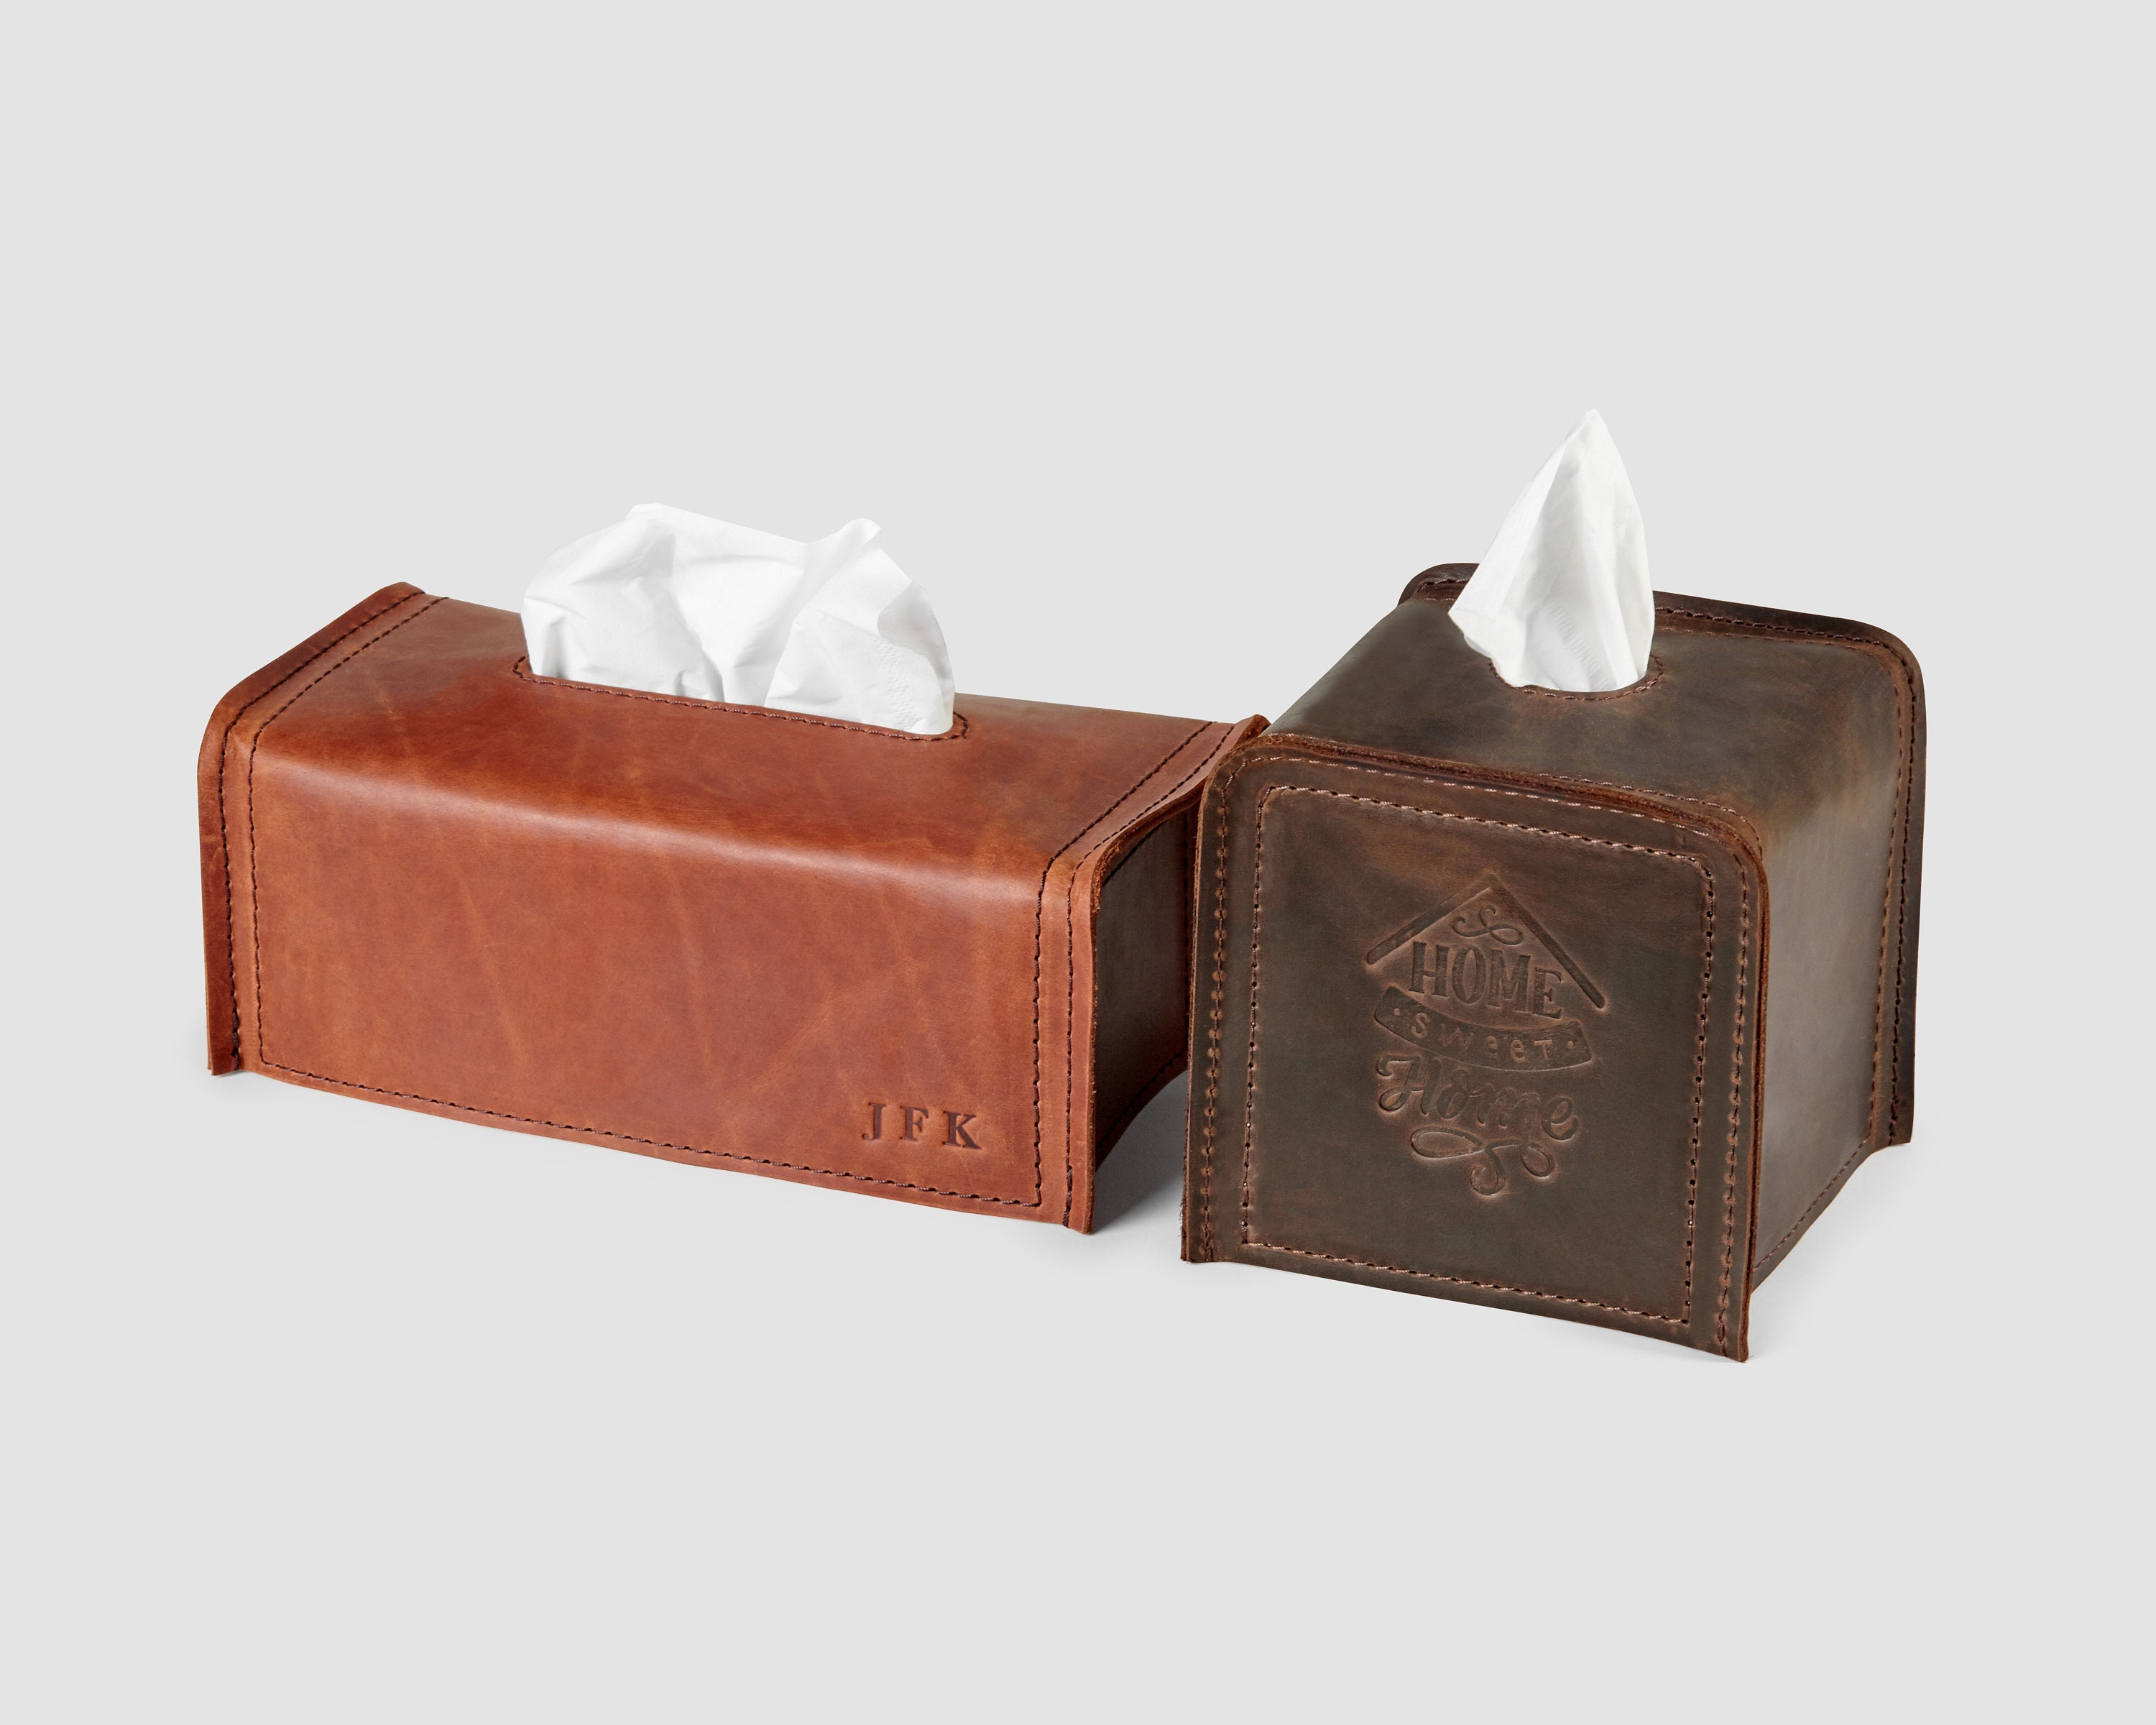 Demiawaking Toilet Tissue Holders Rectangular Tissue Dispenser Napkin Box with Oak Cover for Home and Office 